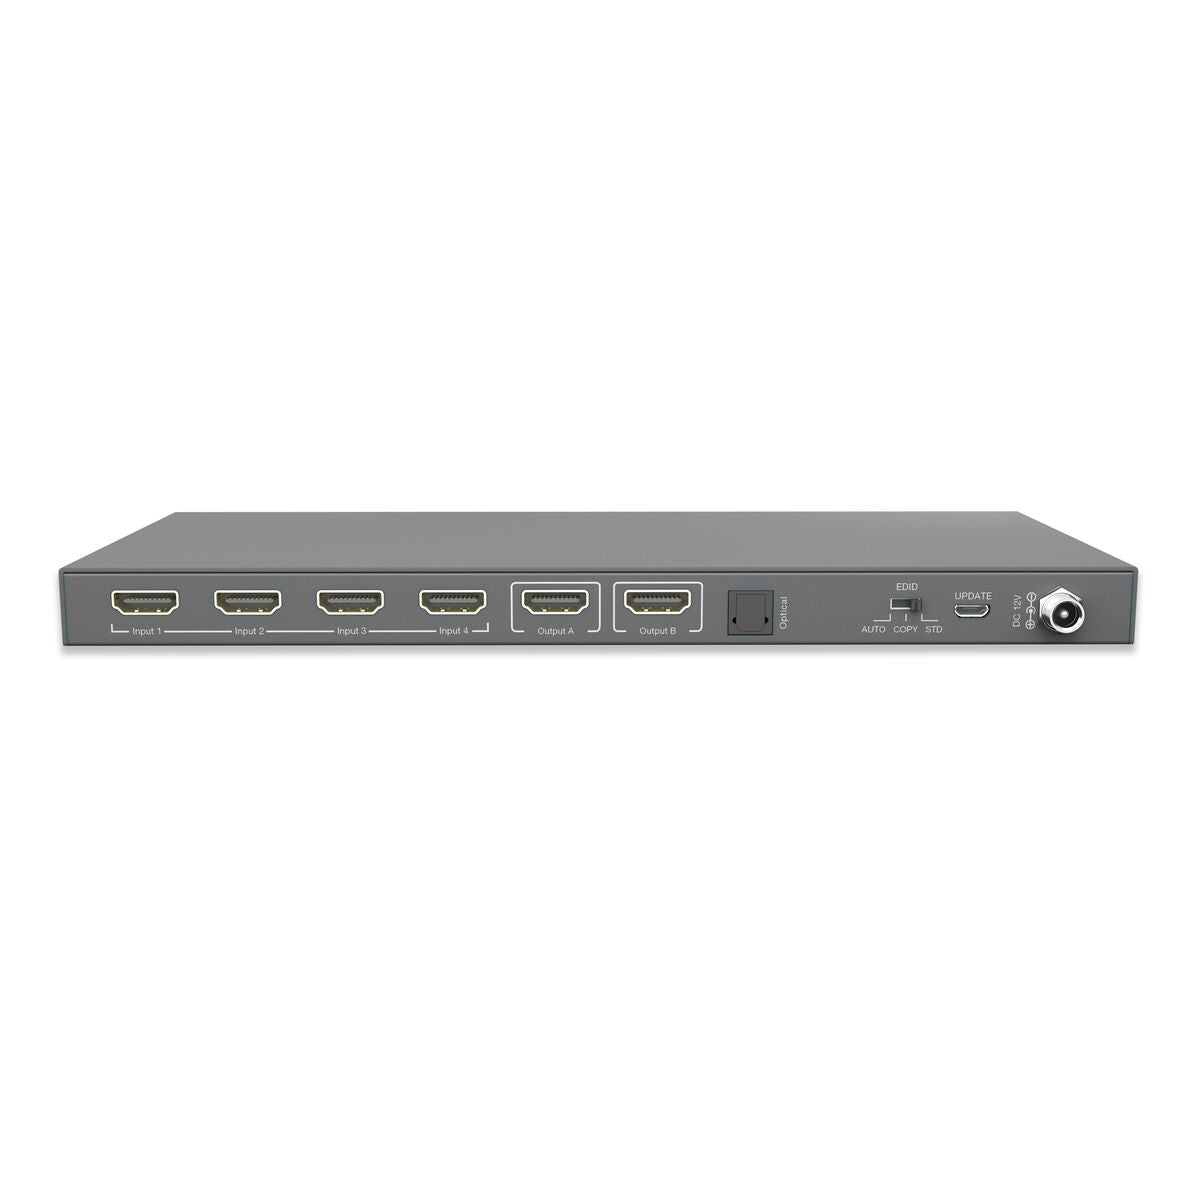 Acheter un switch HDMI matrix Connect 642 Pro ?